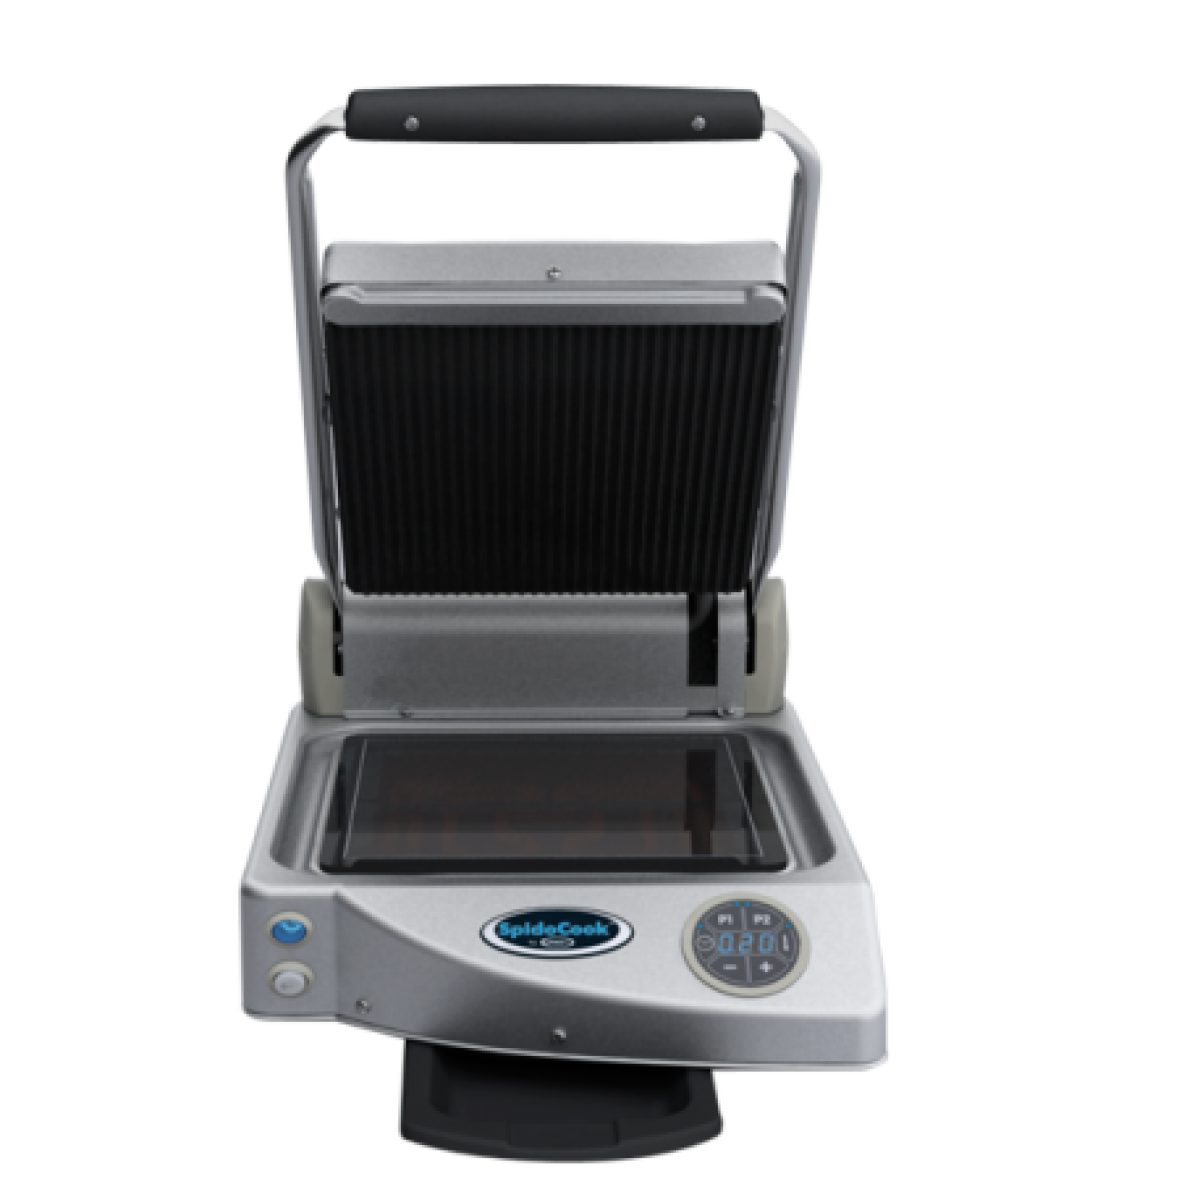 Unox - Machine à panini vitro digitale - noire rainurée - Unox - - Pierrade, grill